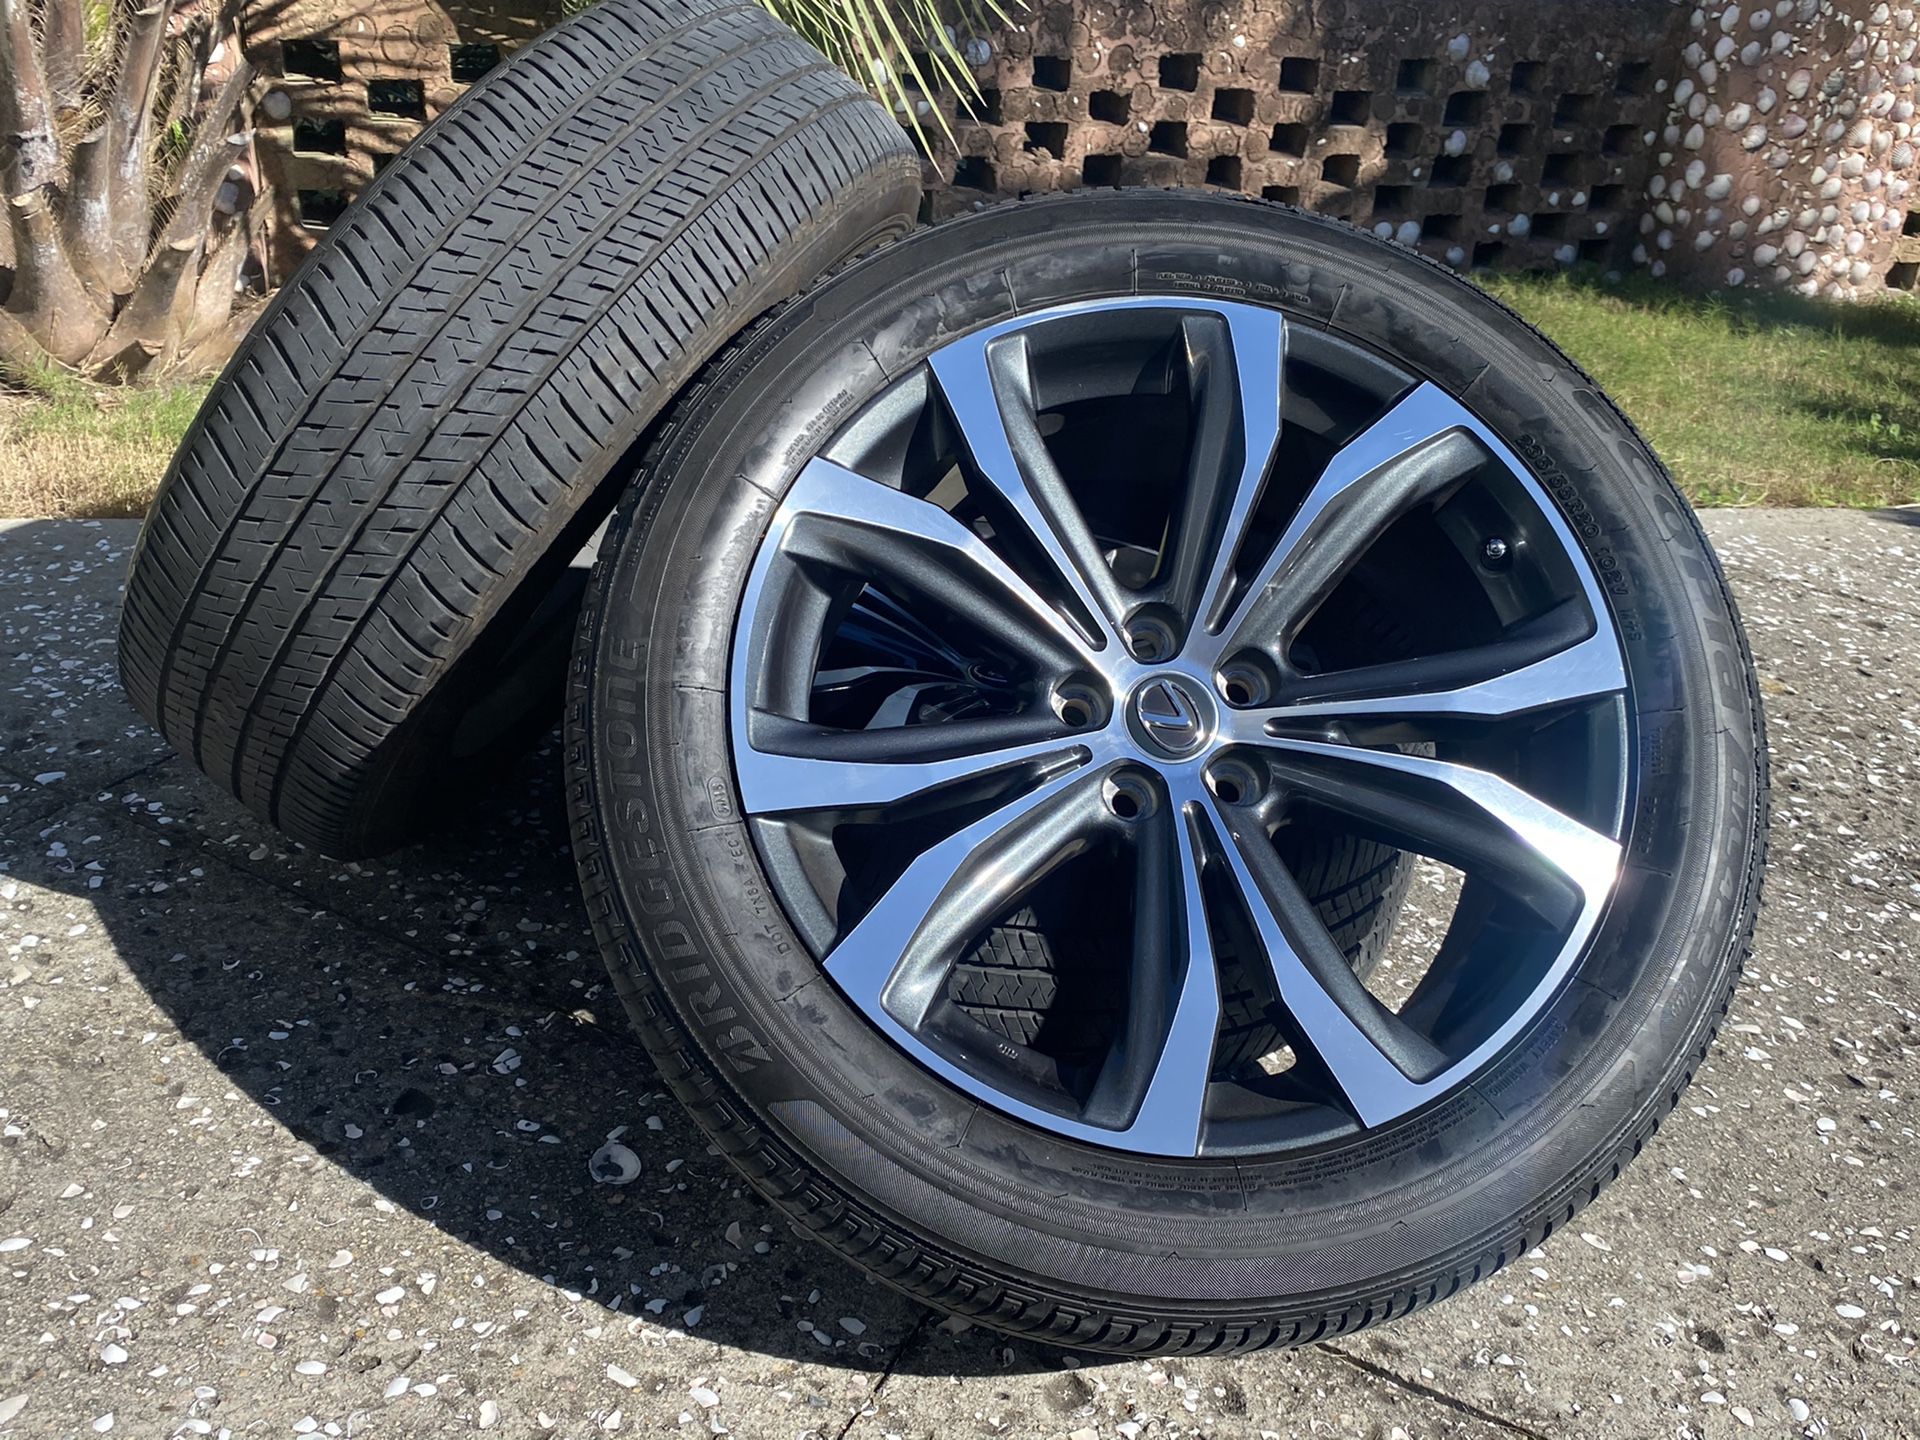 20” Lexus RX350 F Sport RX-350 5 lug wheels original take offs black rims tires 235/55r20 Bridgestone oem factory